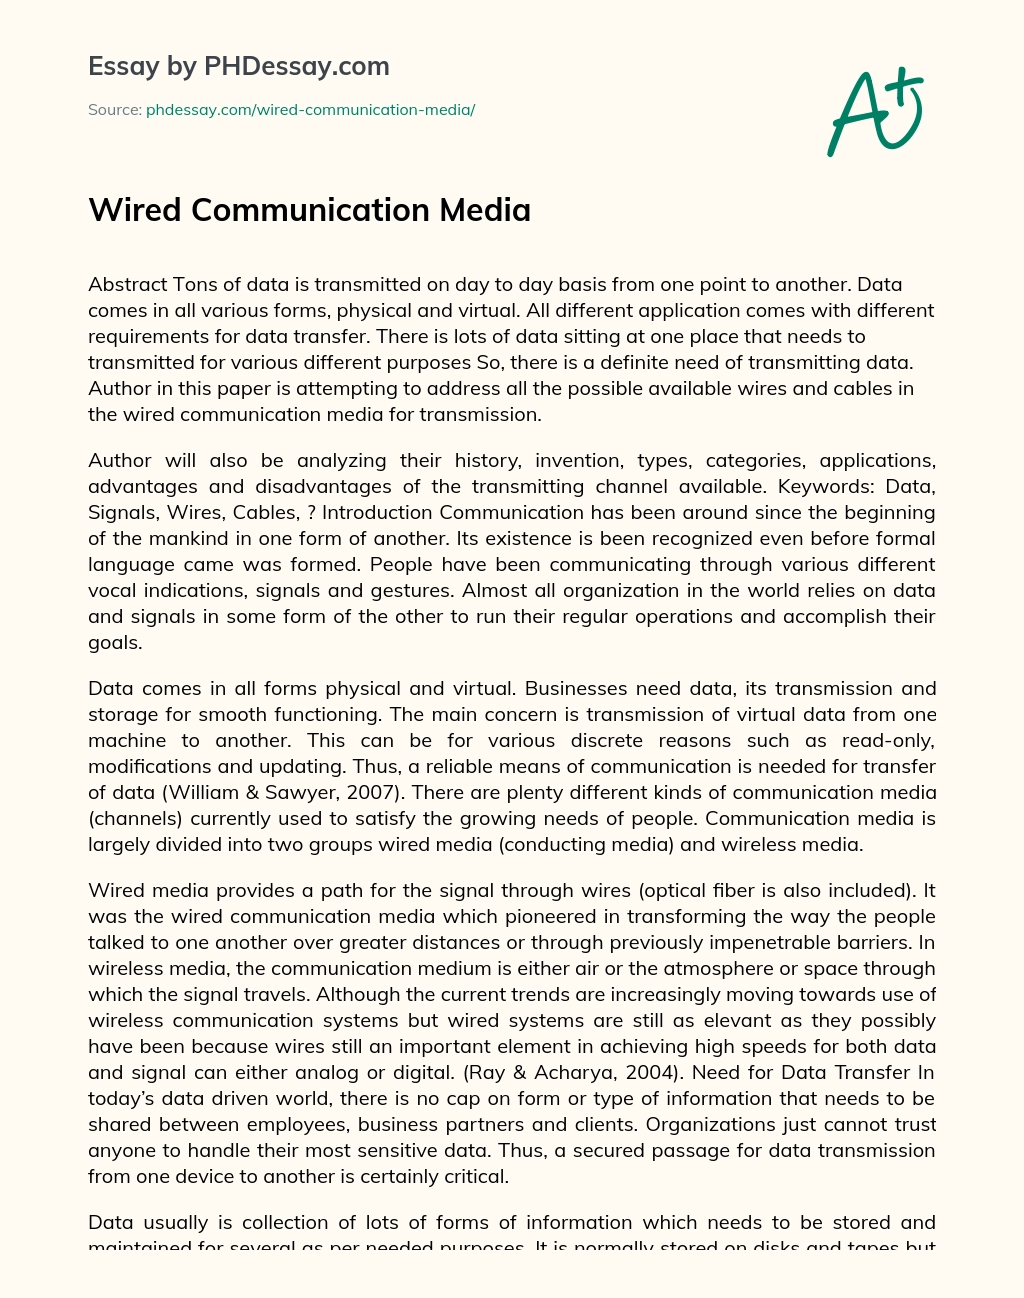 Wired Communication Media essay